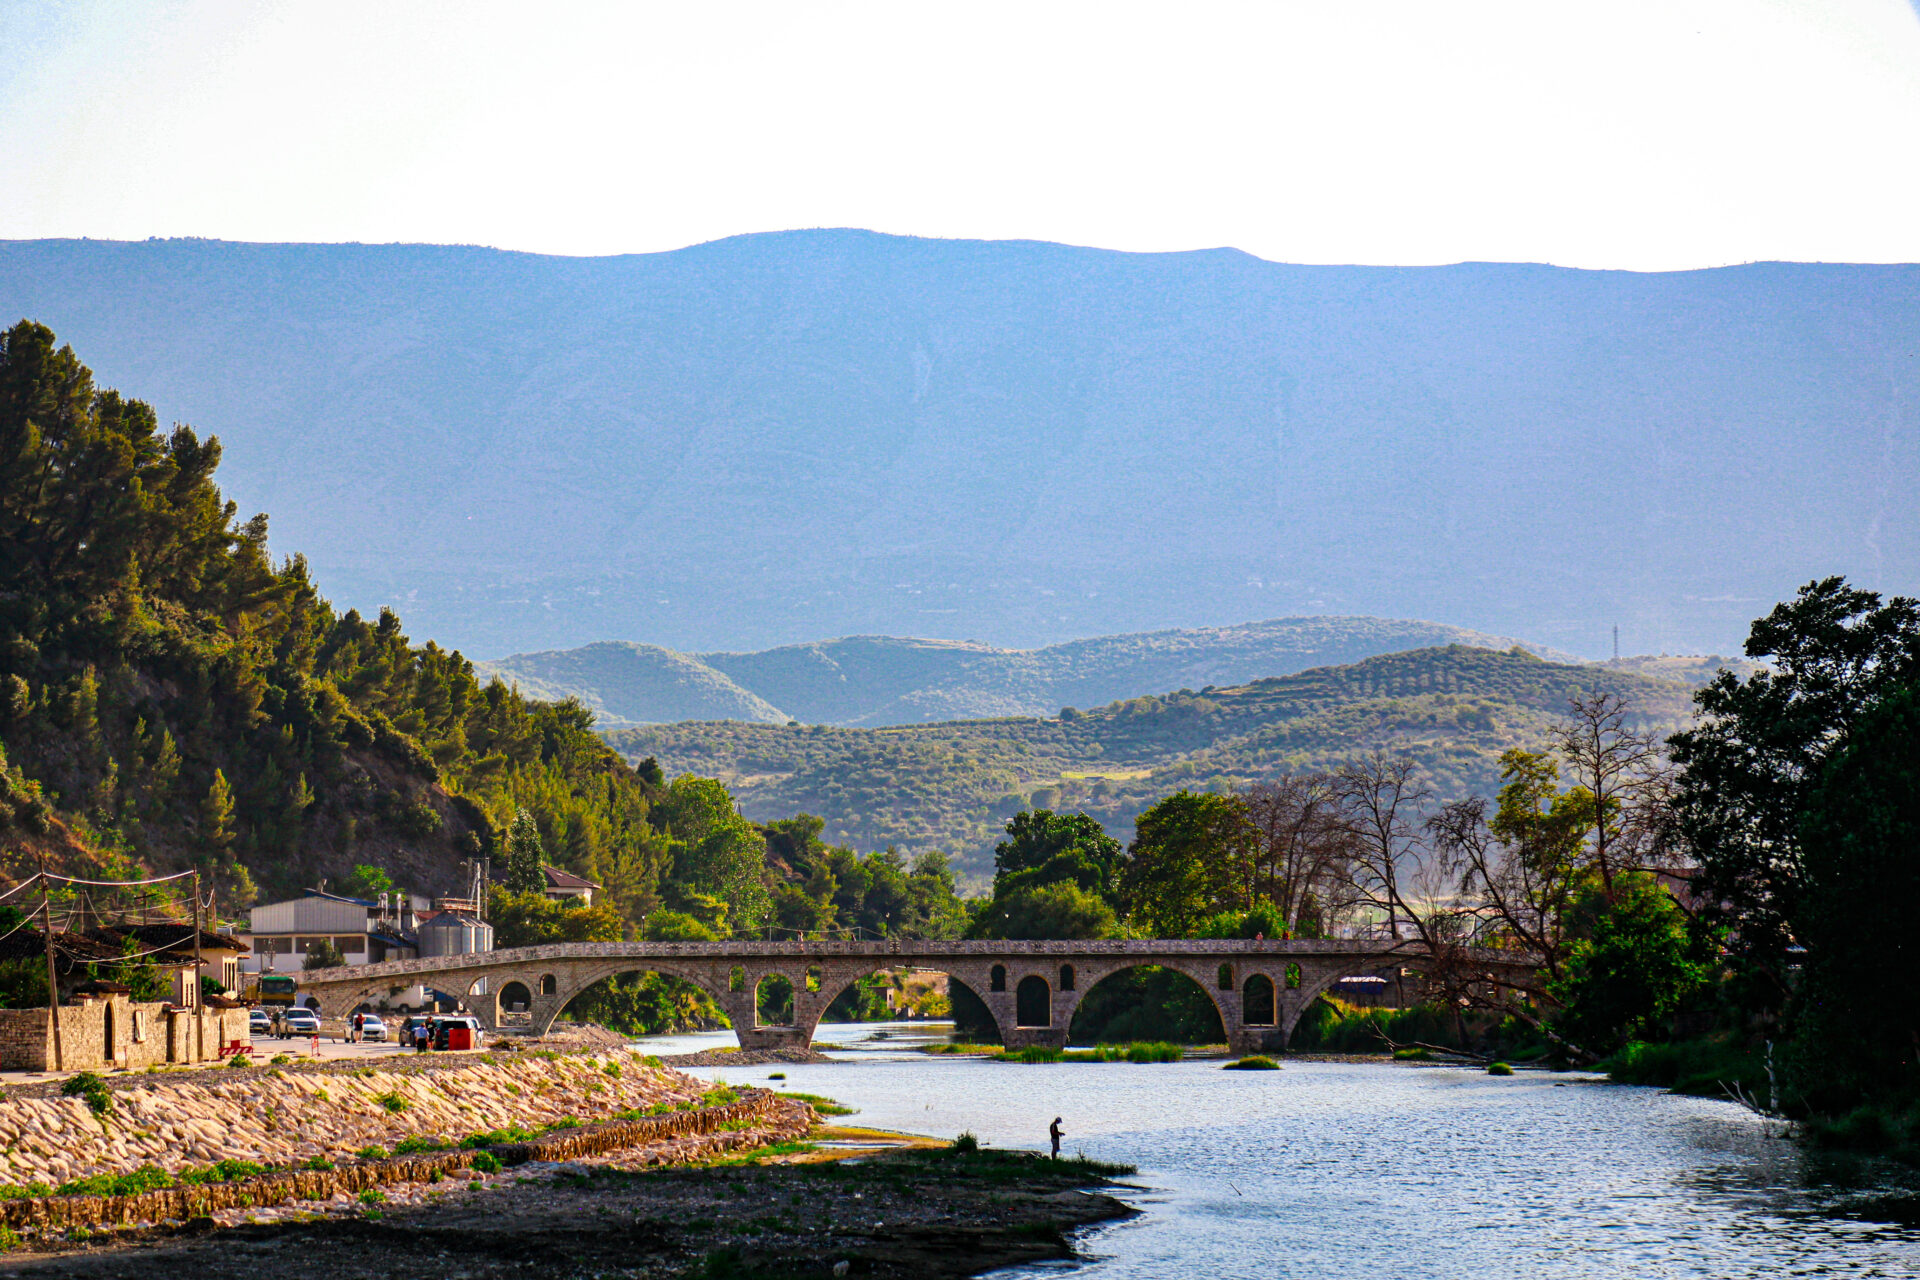 Ottoman style bridge in Berat